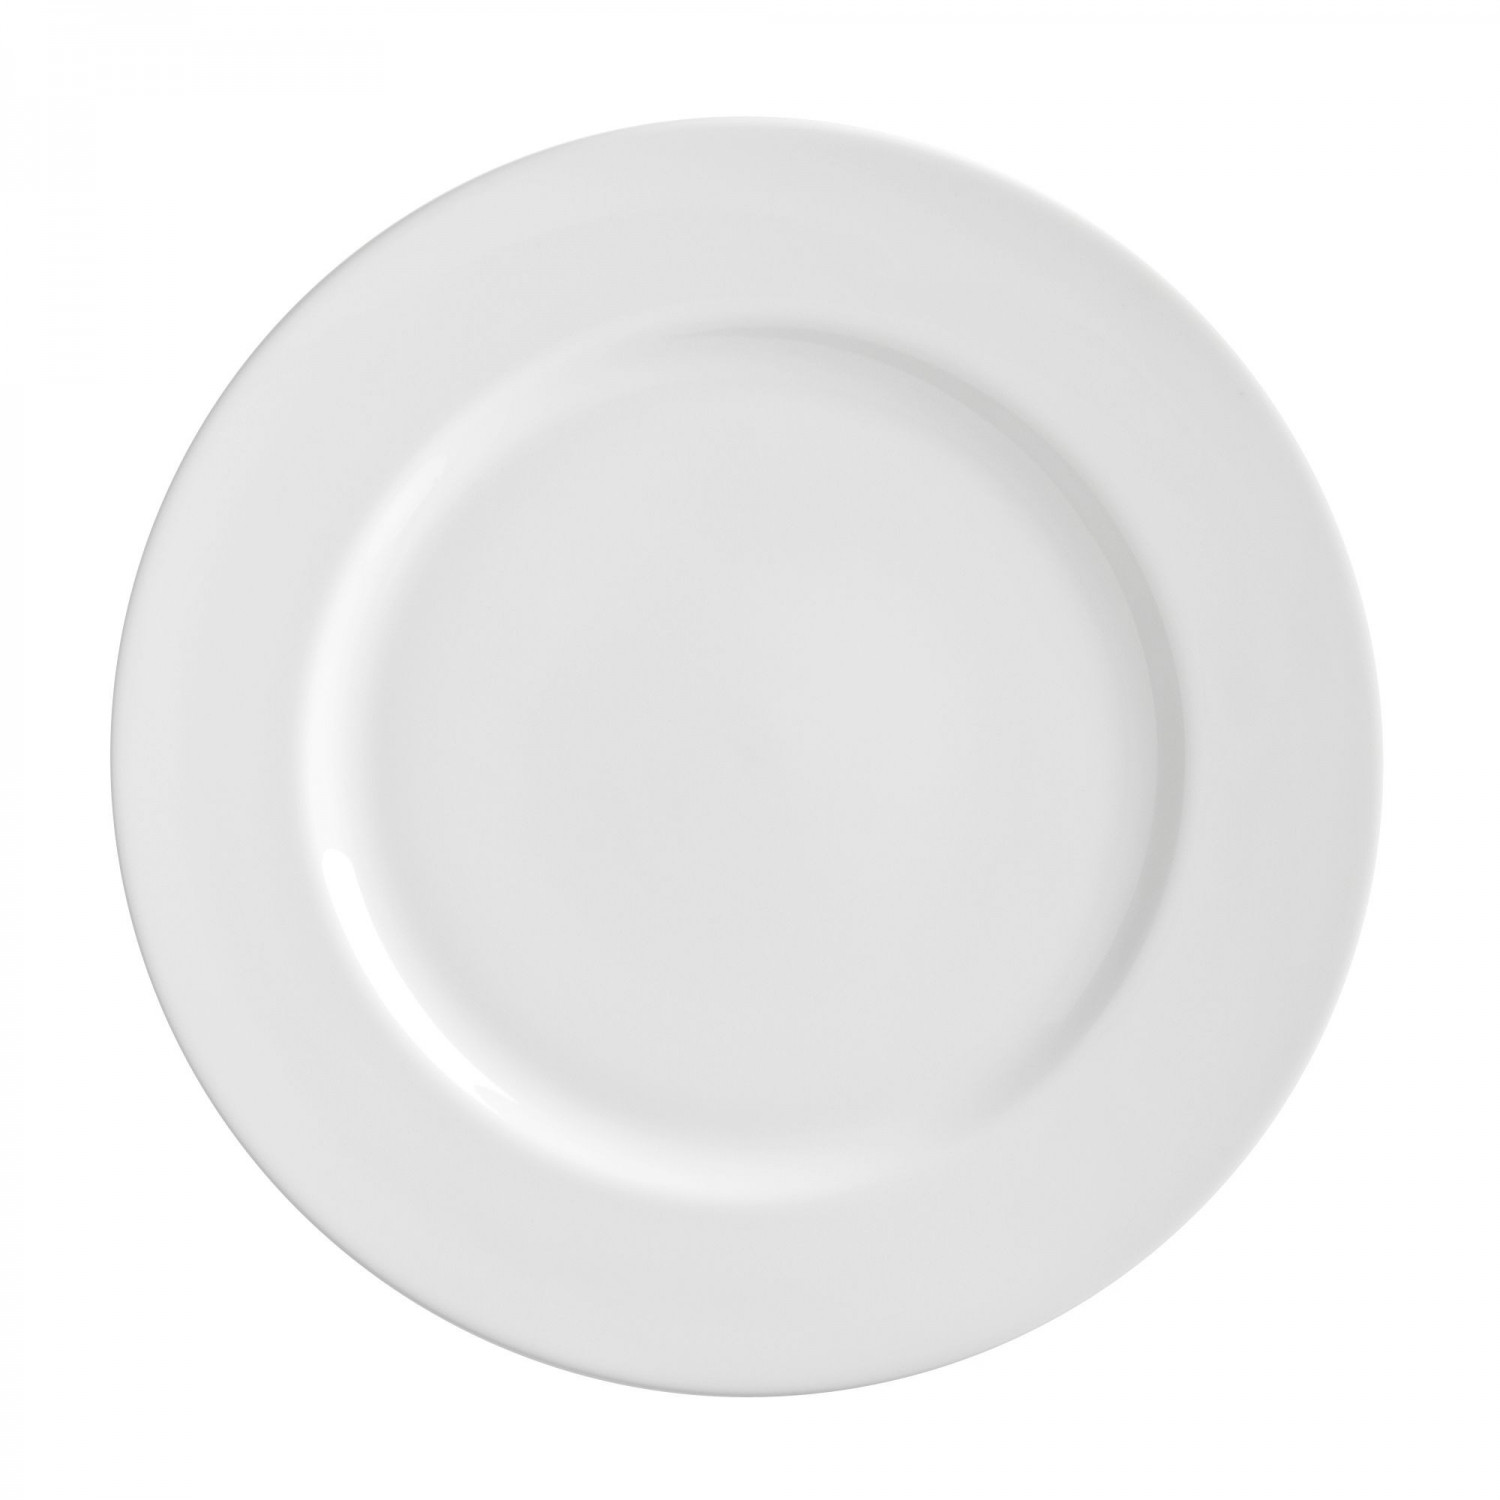 White Dinner Plates
 10 Strawberry Street RW0040 Royal White Dinner Plate 11"